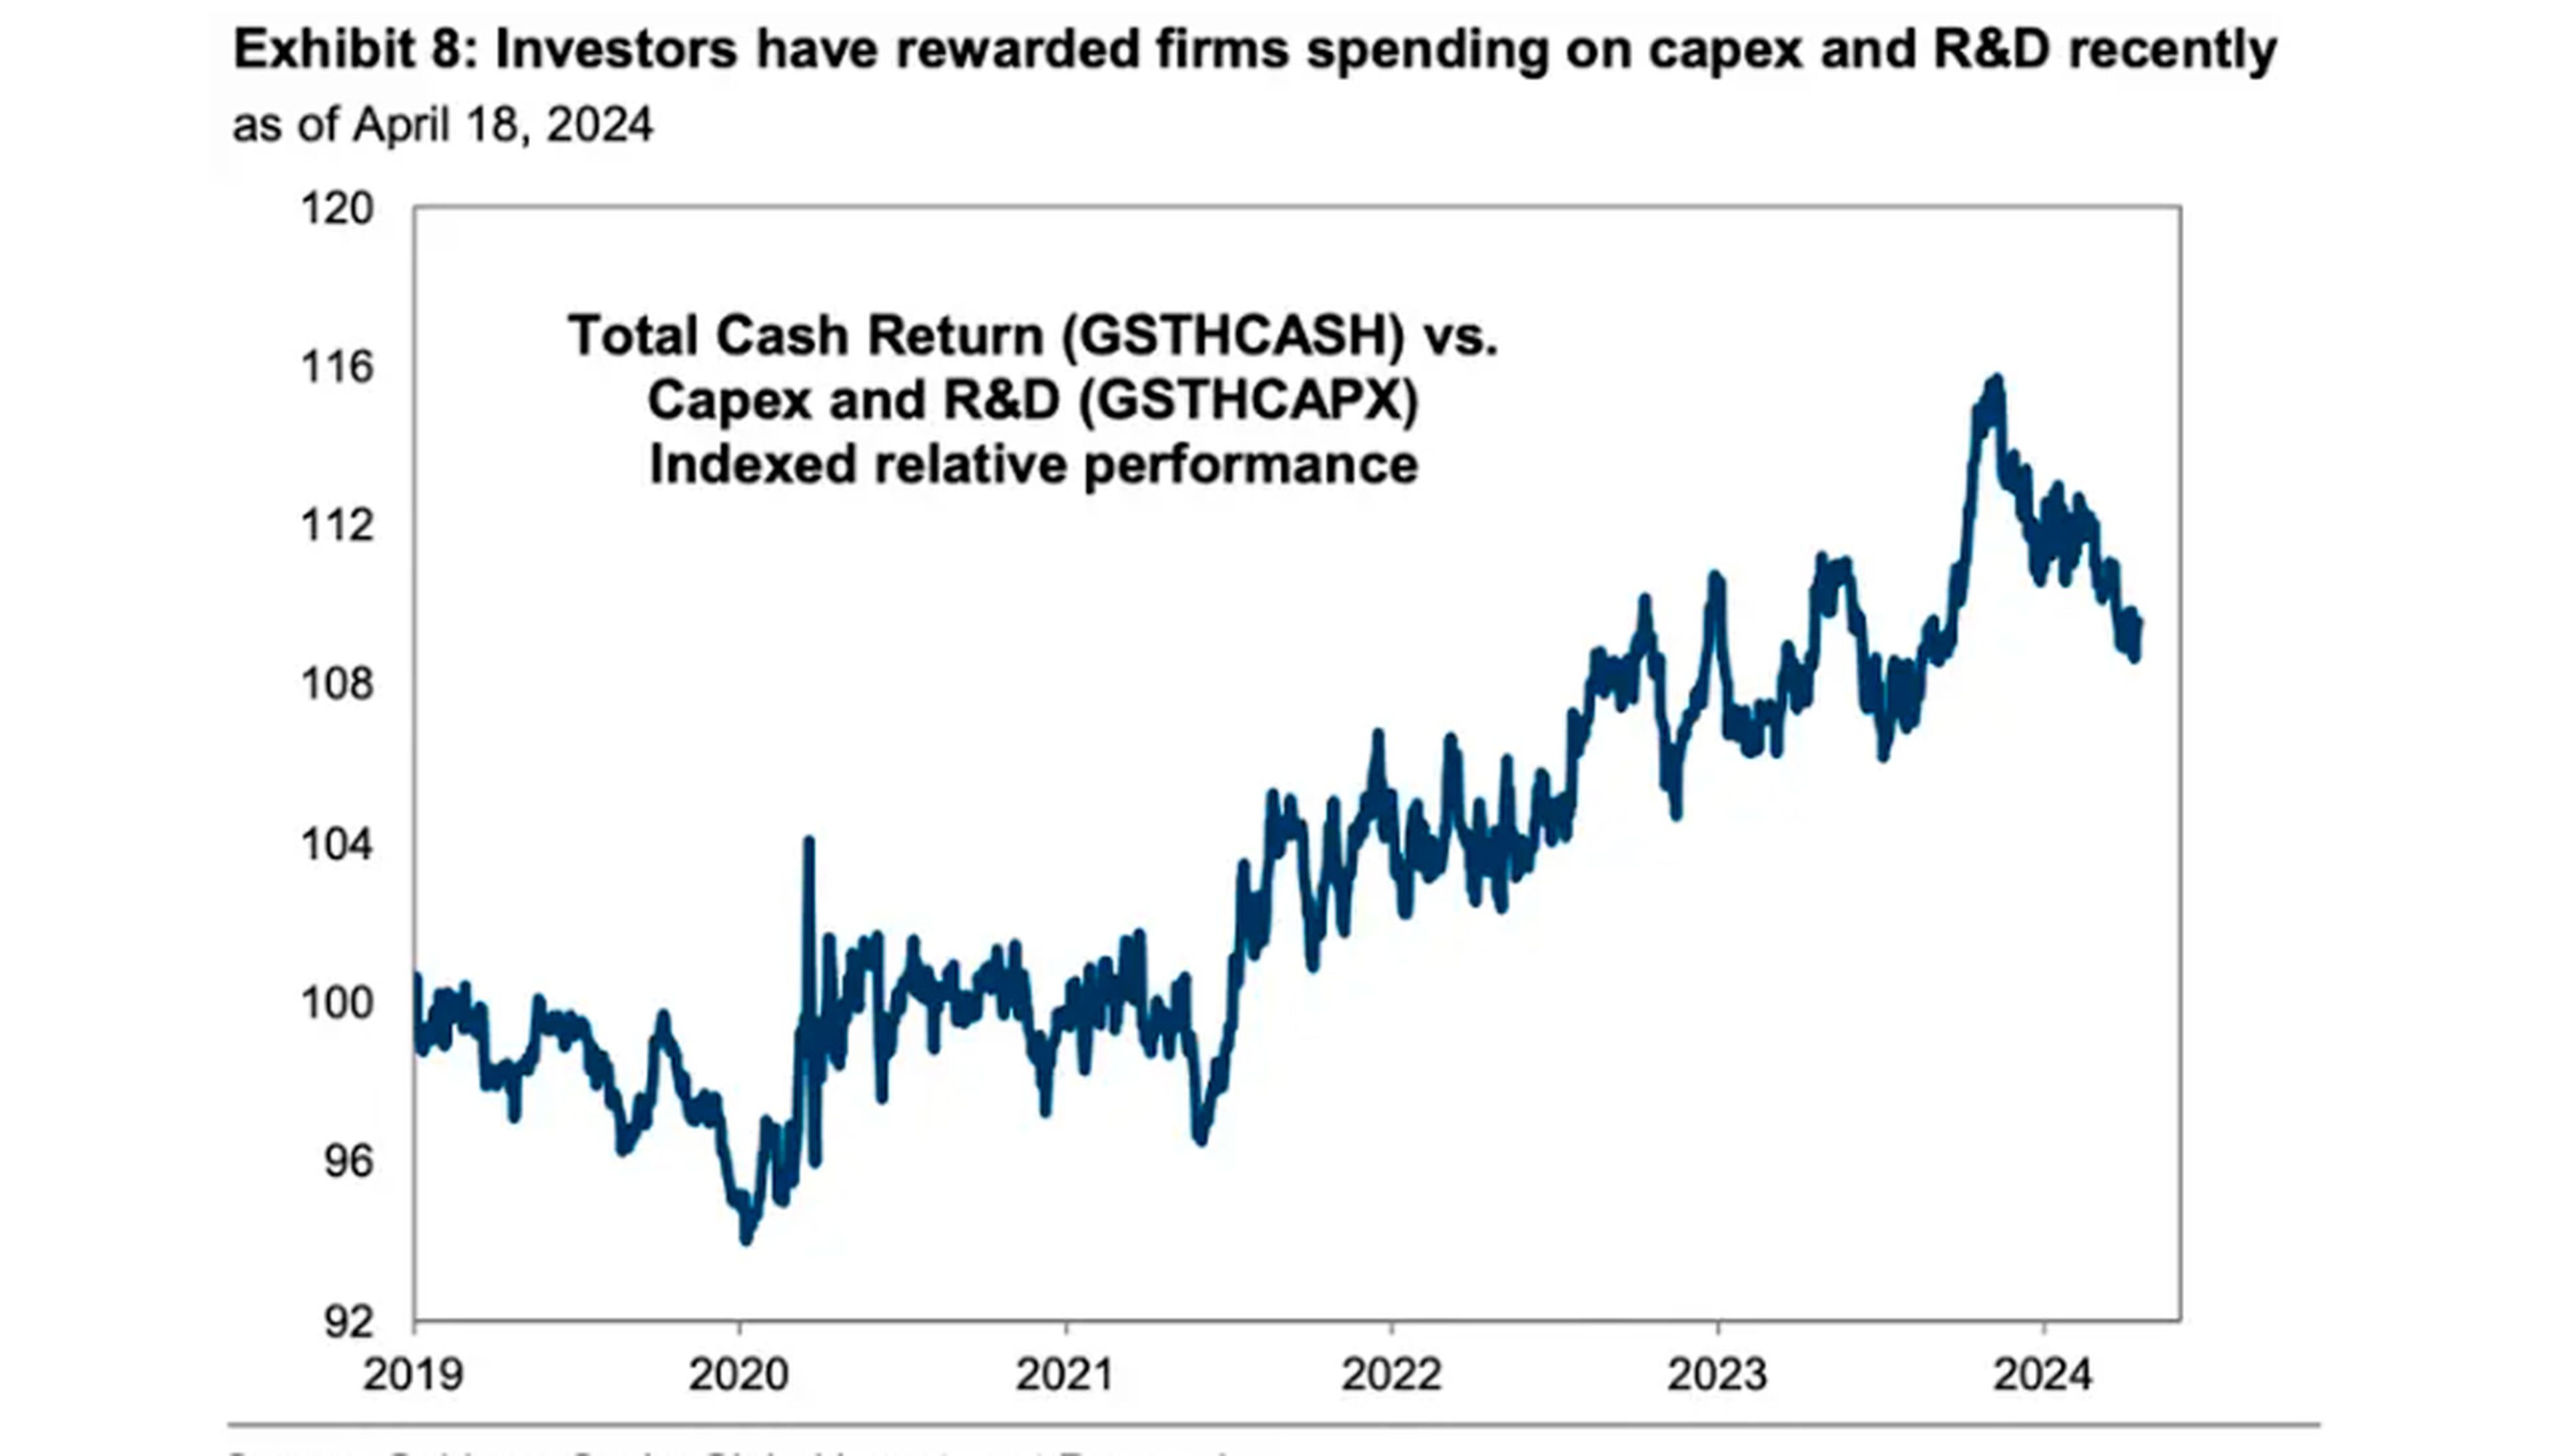 Los inversores están recompensando a las empresas que invierten en capital e I+D. Fuente: Goldman Sachs Global Investment Research